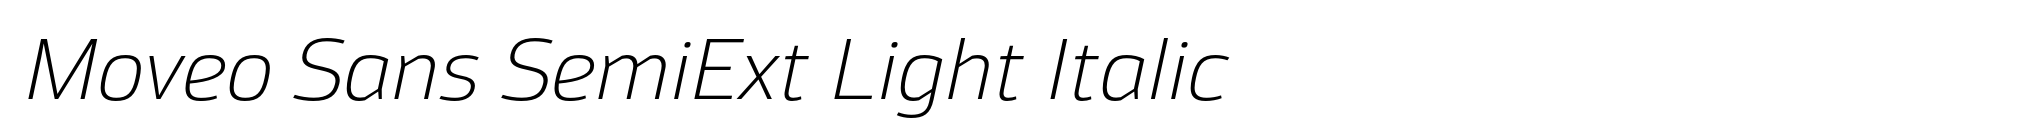 Moveo Sans SemiExt Light Italic image